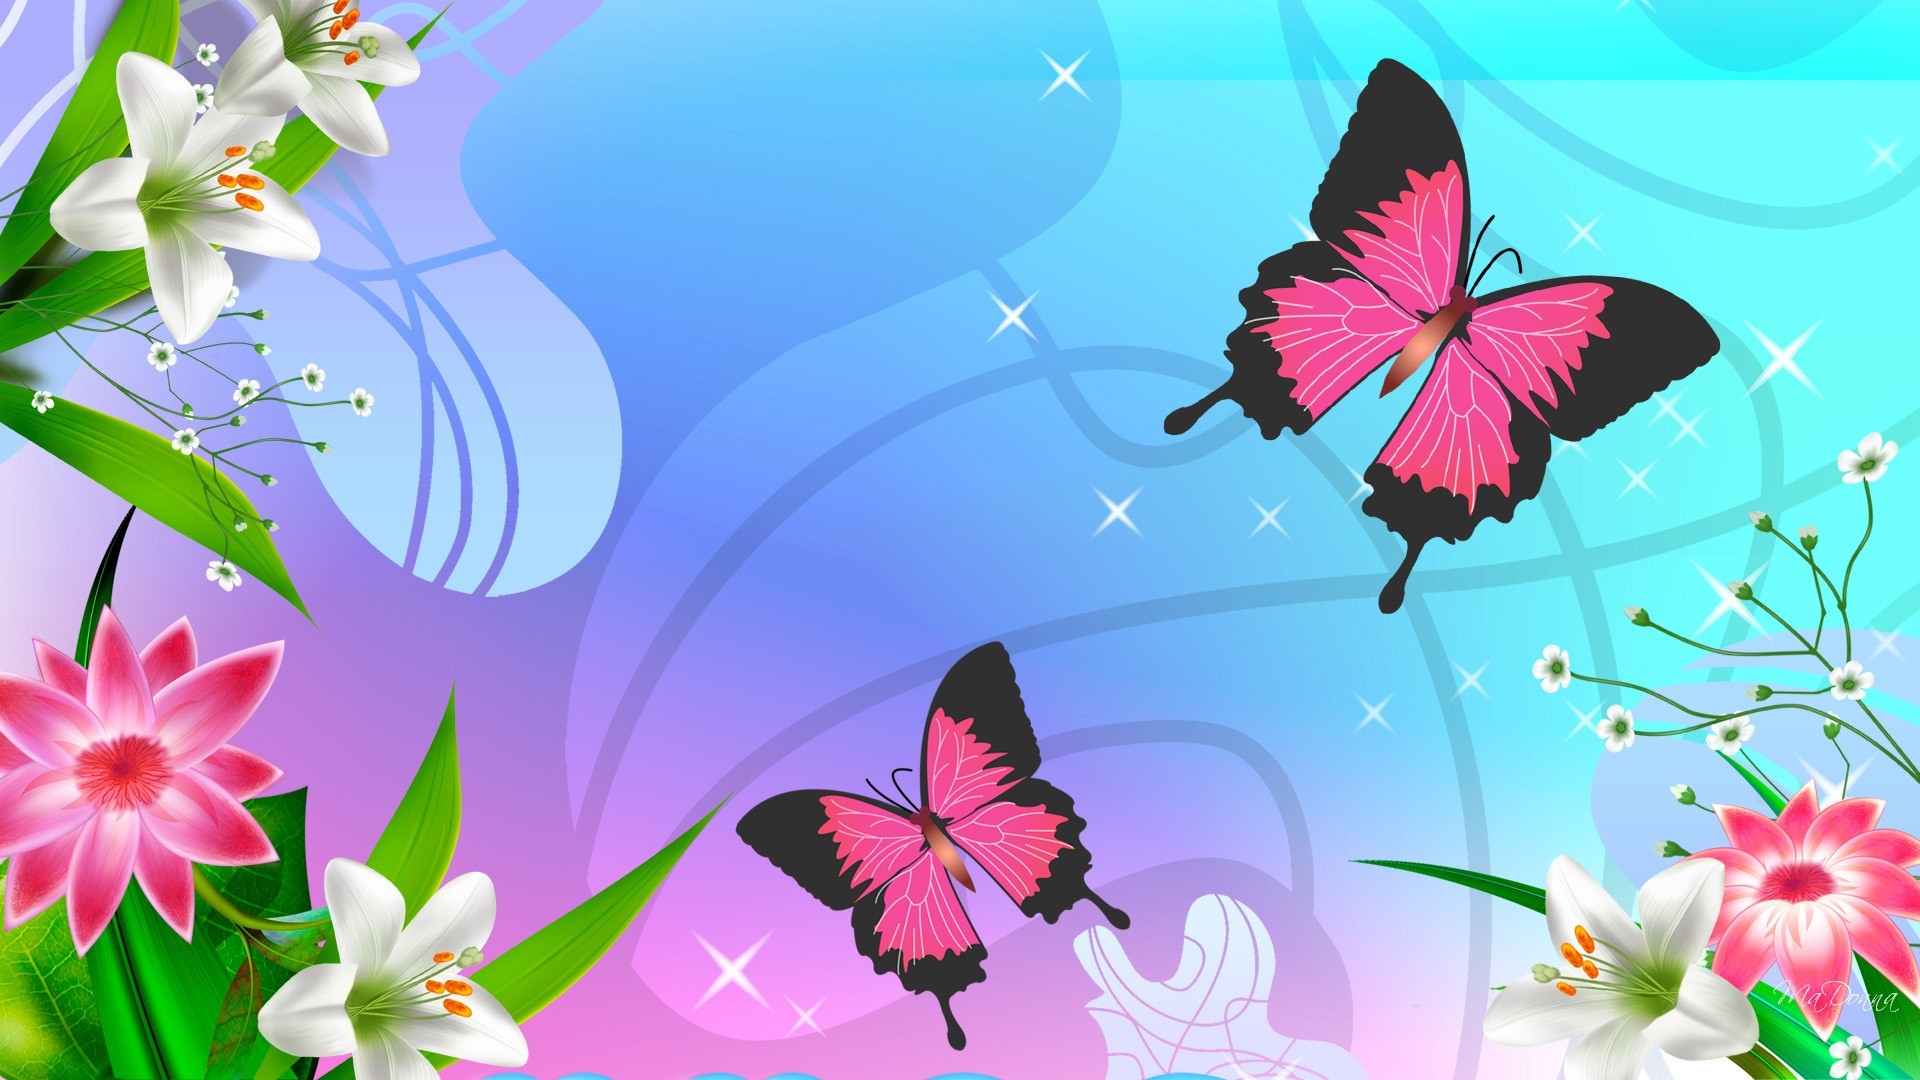 49+] Cute Butterfly Wallpaper - WallpaperSafari